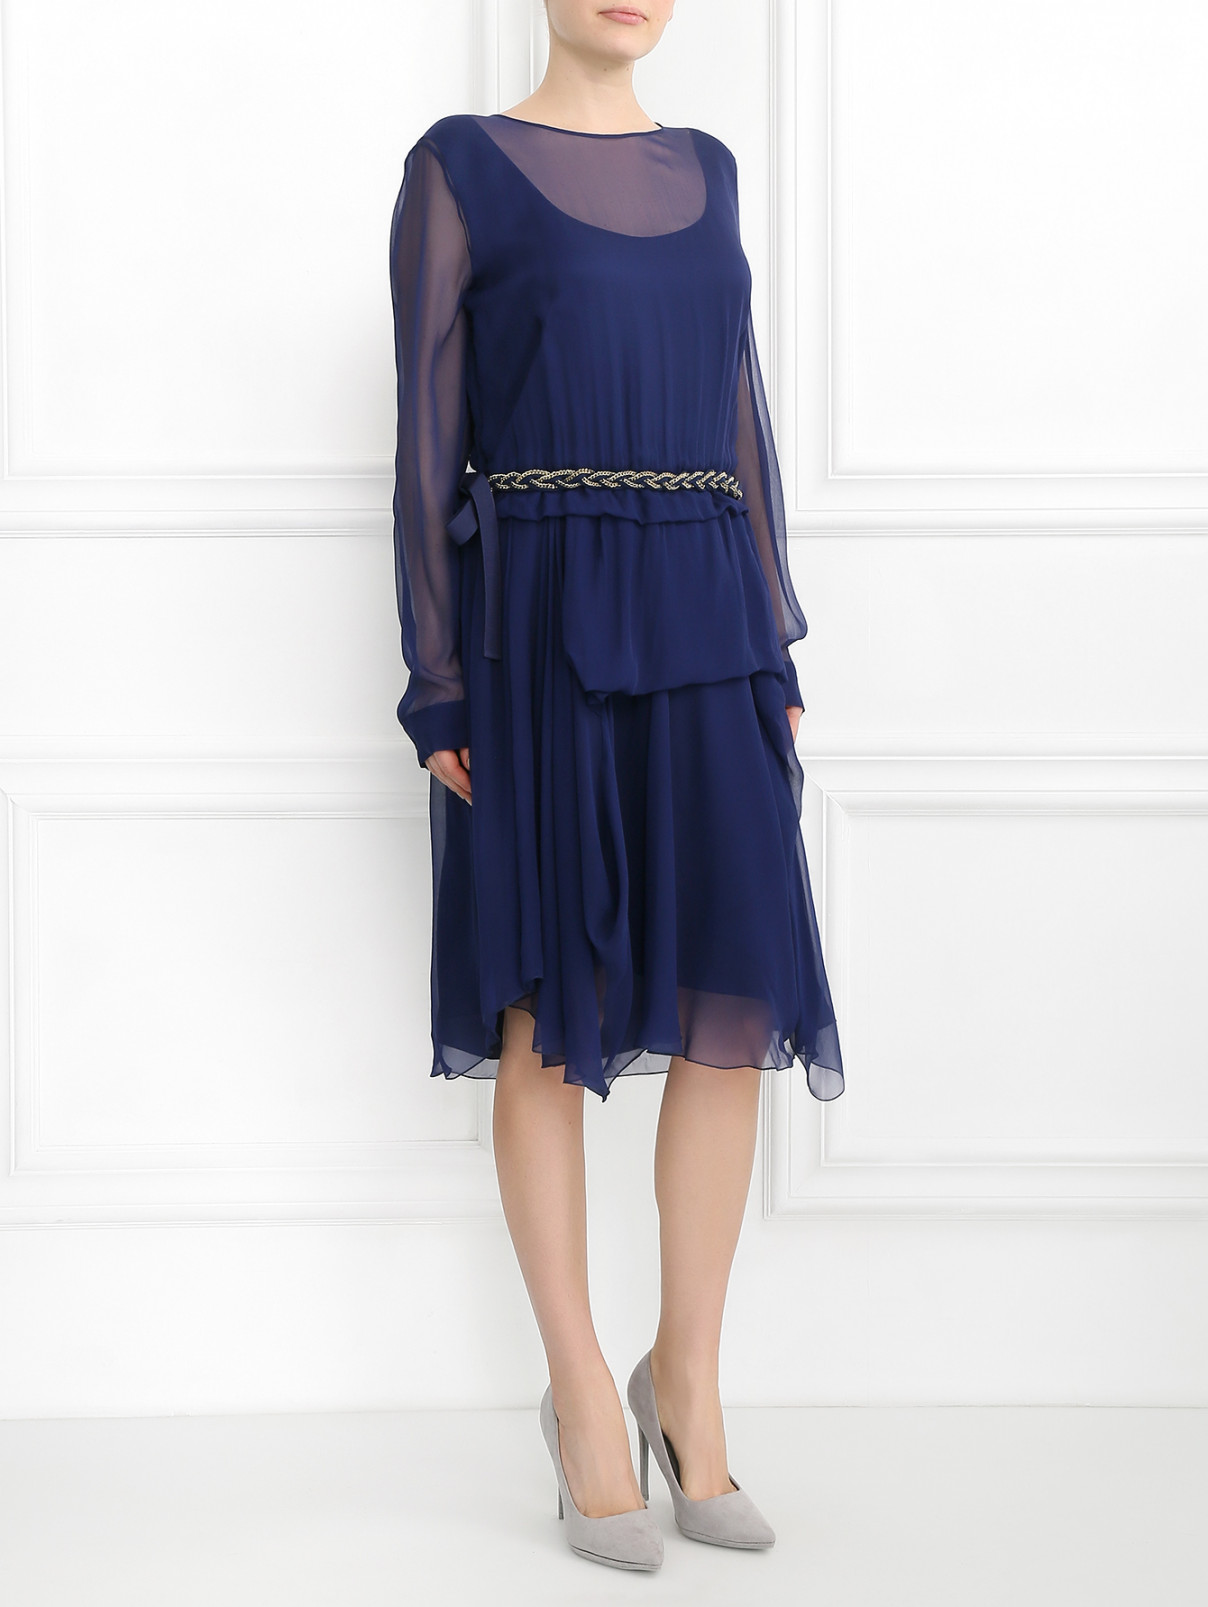 Платье из шелка с декором Alberta Ferretti  –  Модель Общий вид  – Цвет:  Синий